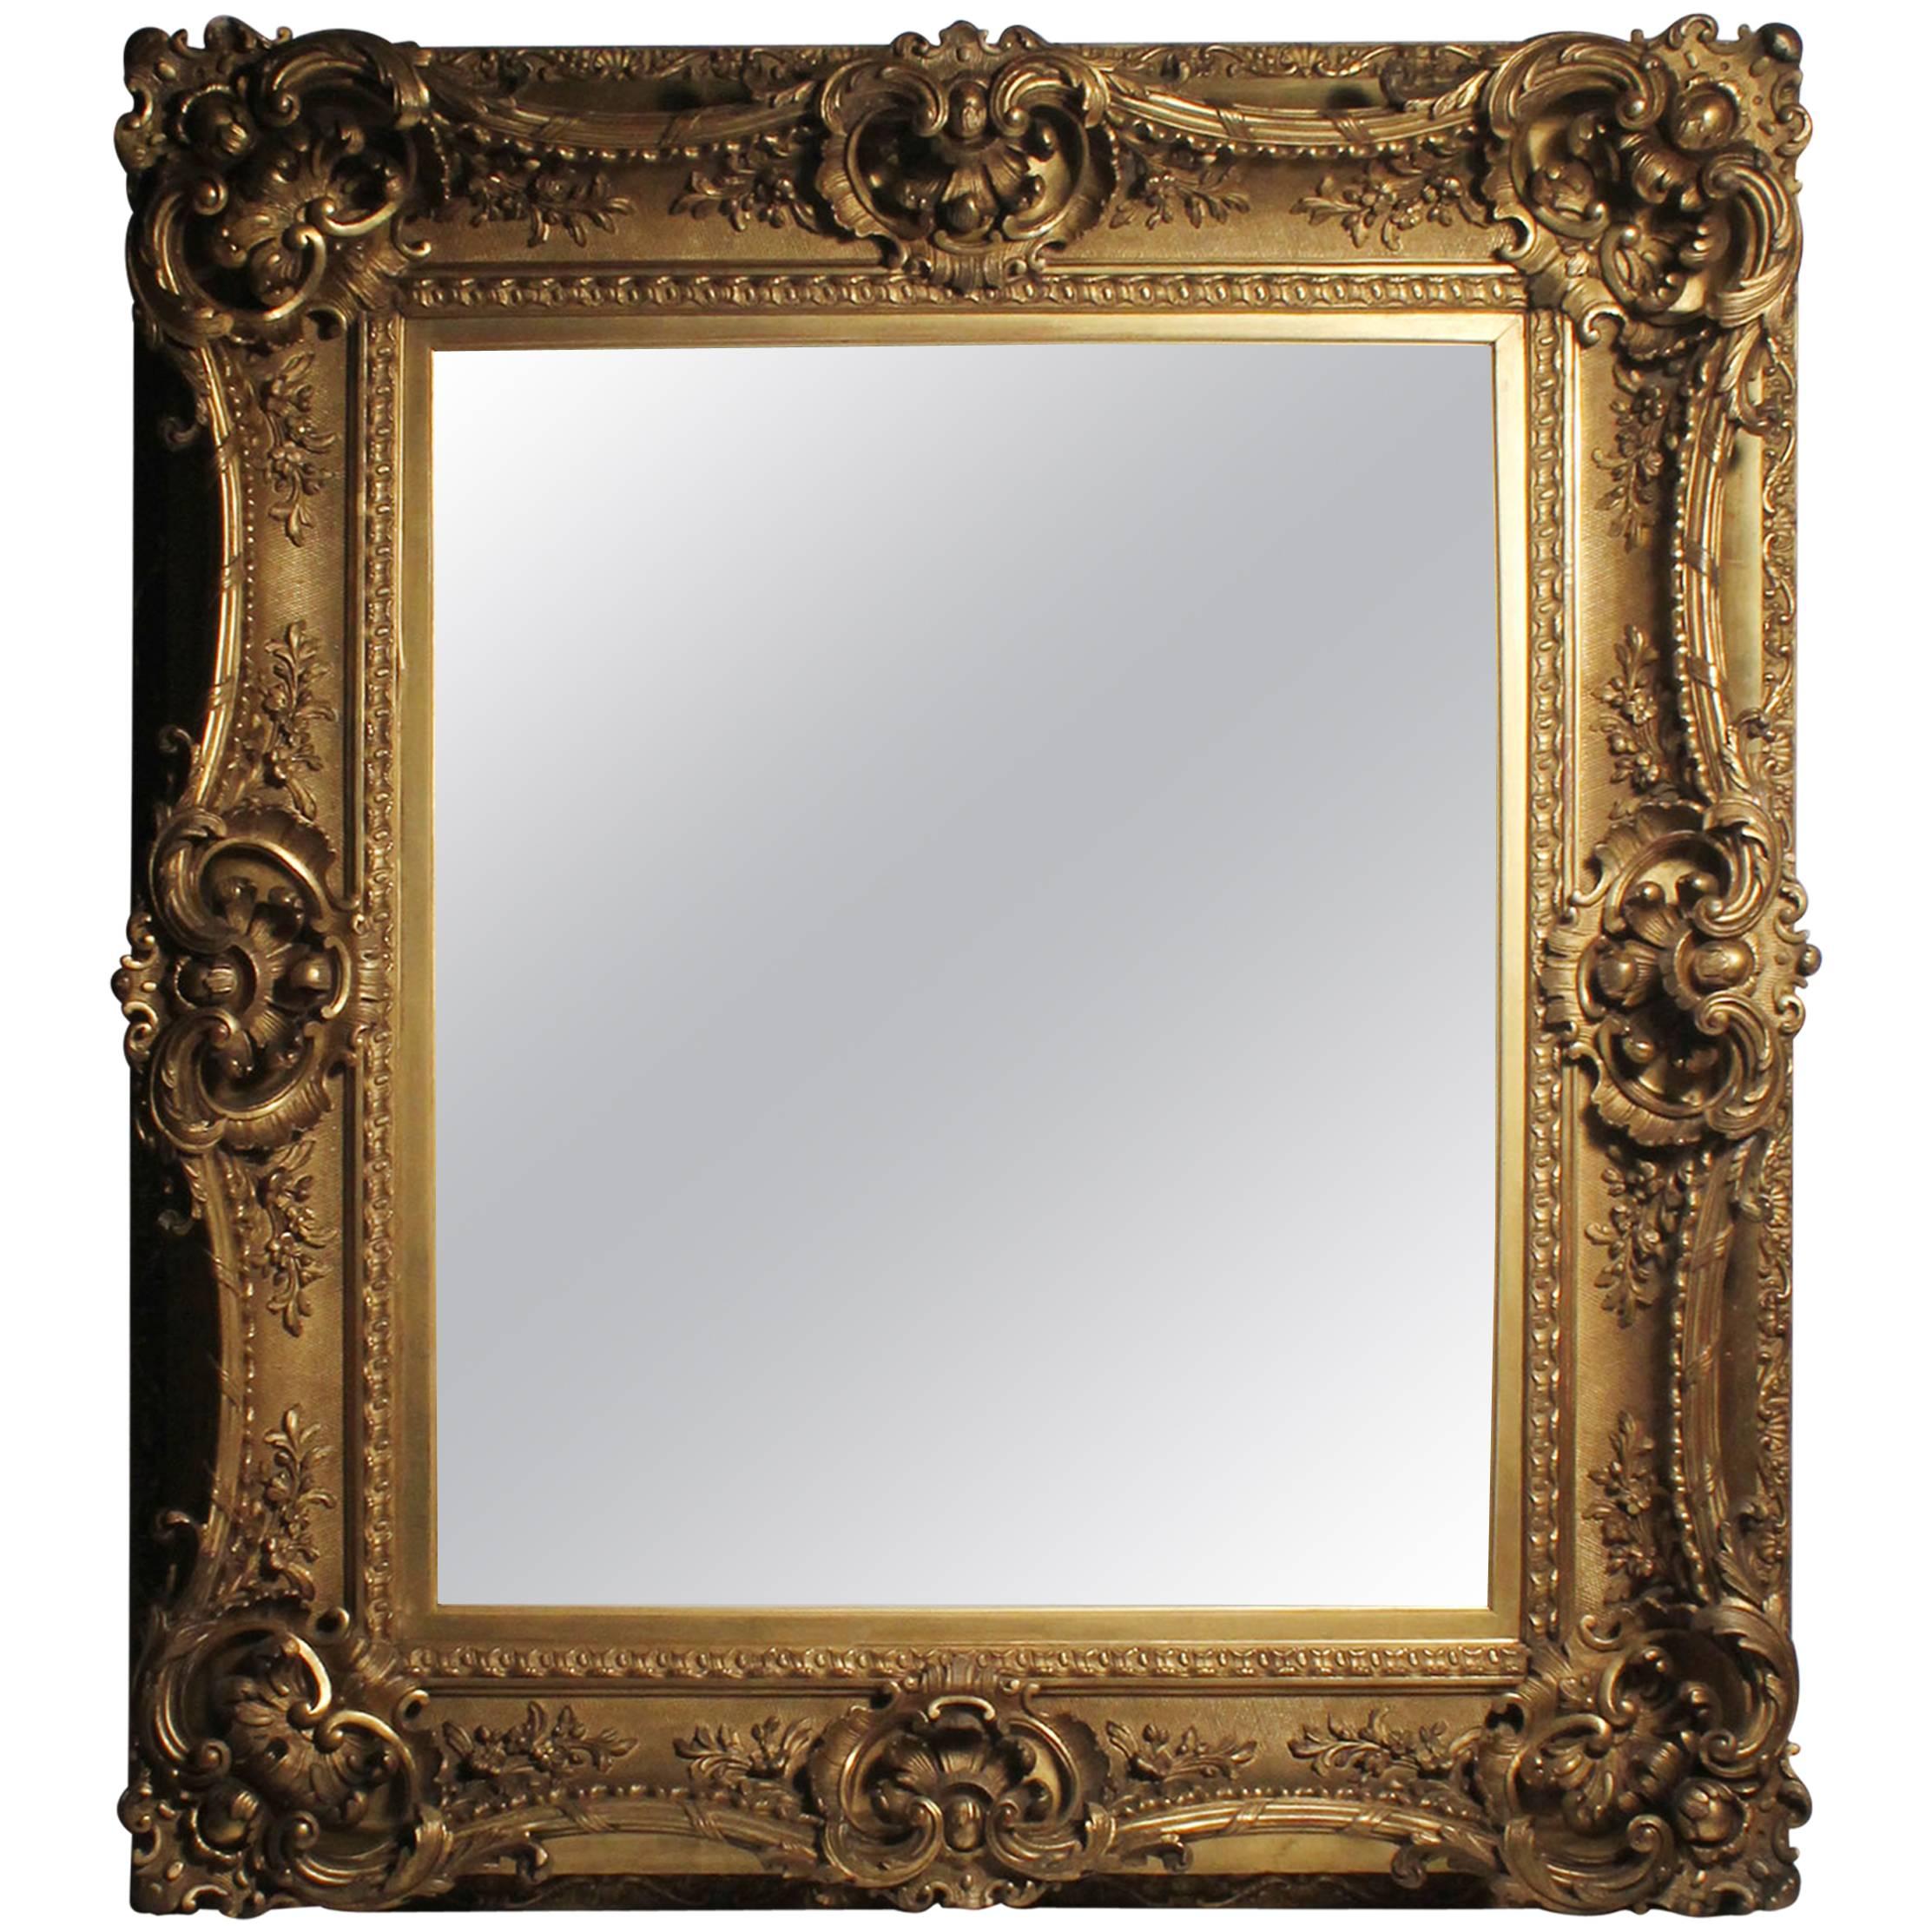 Antique Italian Gilt 19th Century Picture Frame or Mirror Baroque Rococo Style